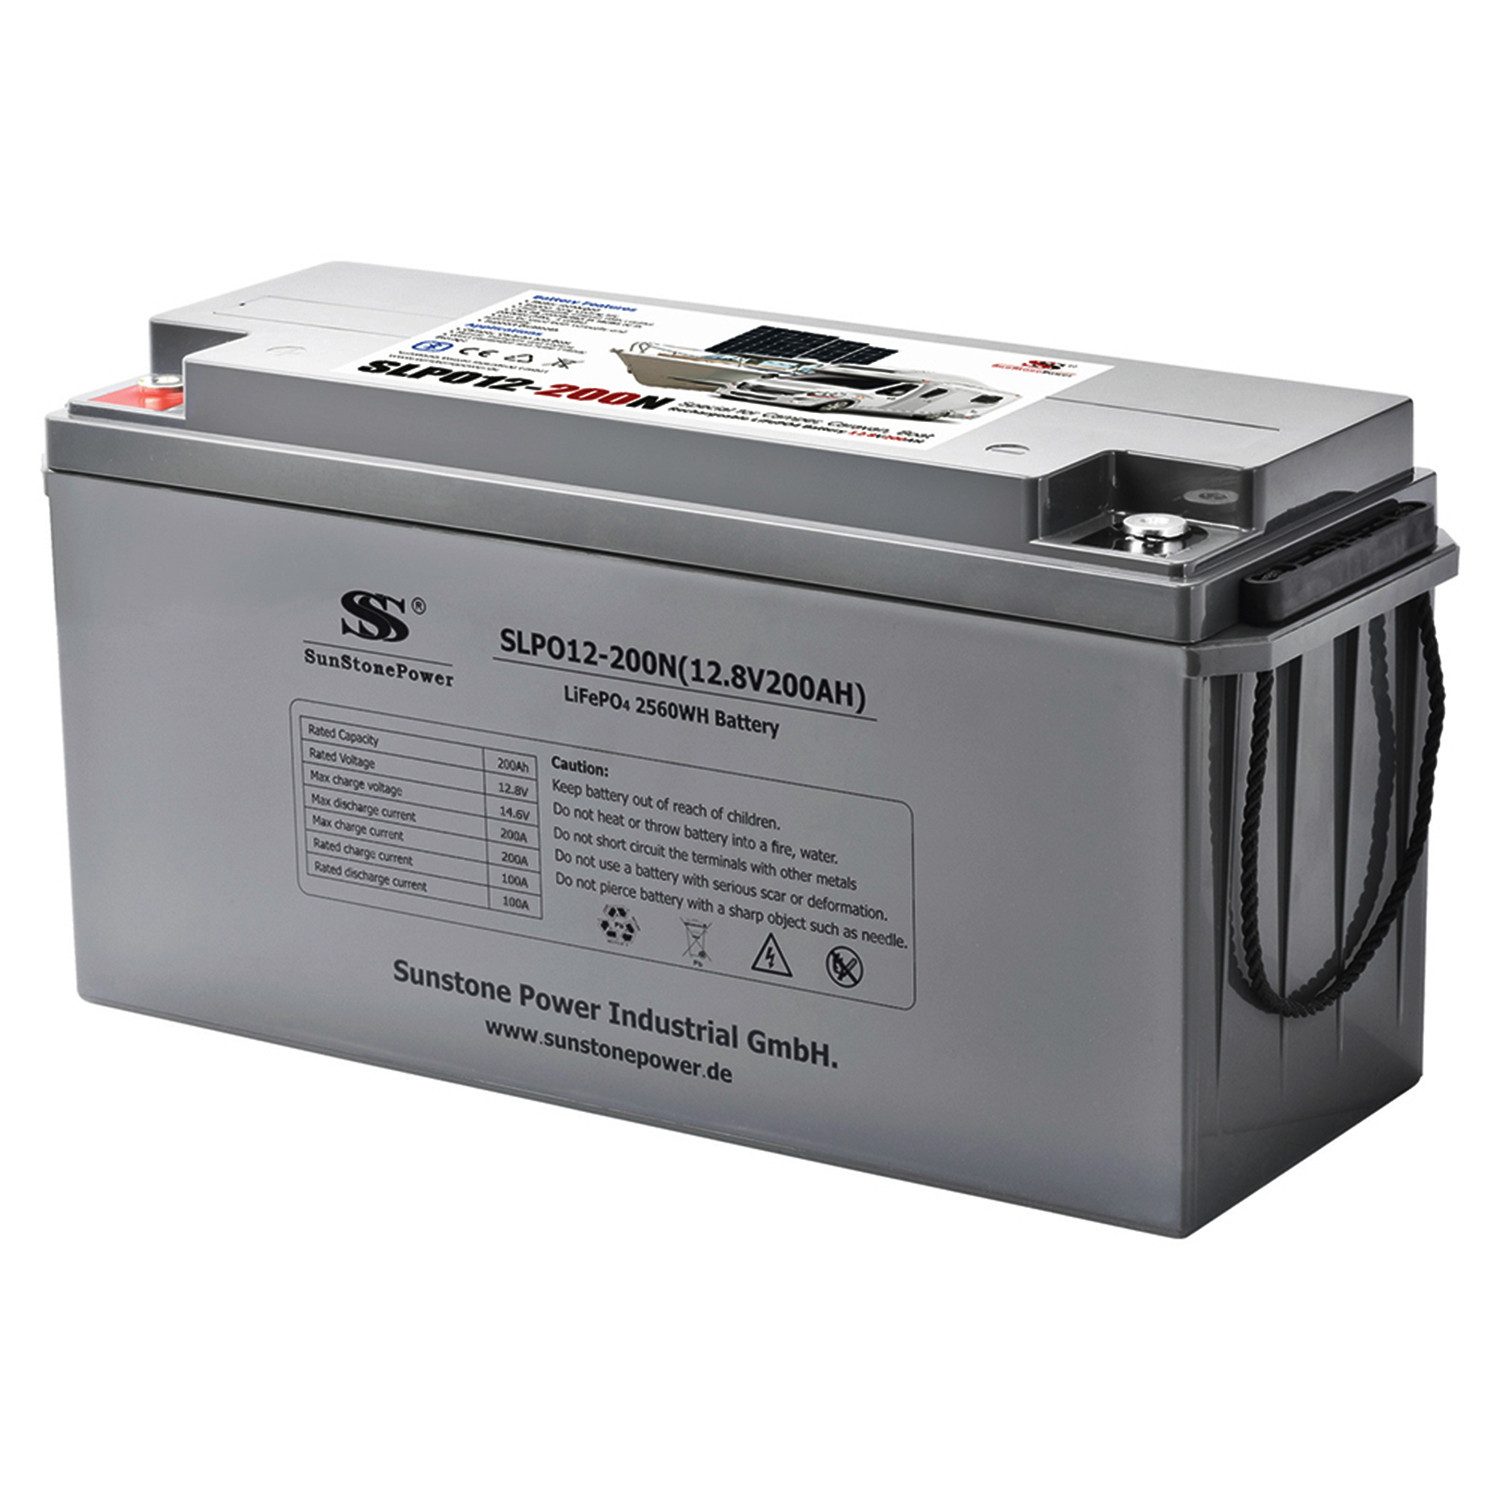 Sunstone Power 12V 200AH LiFePO4 Batterie 1C Entladung Energiespeicher für WOMO RV Solarakkus 200000 mAh (12 V), Bluetooth